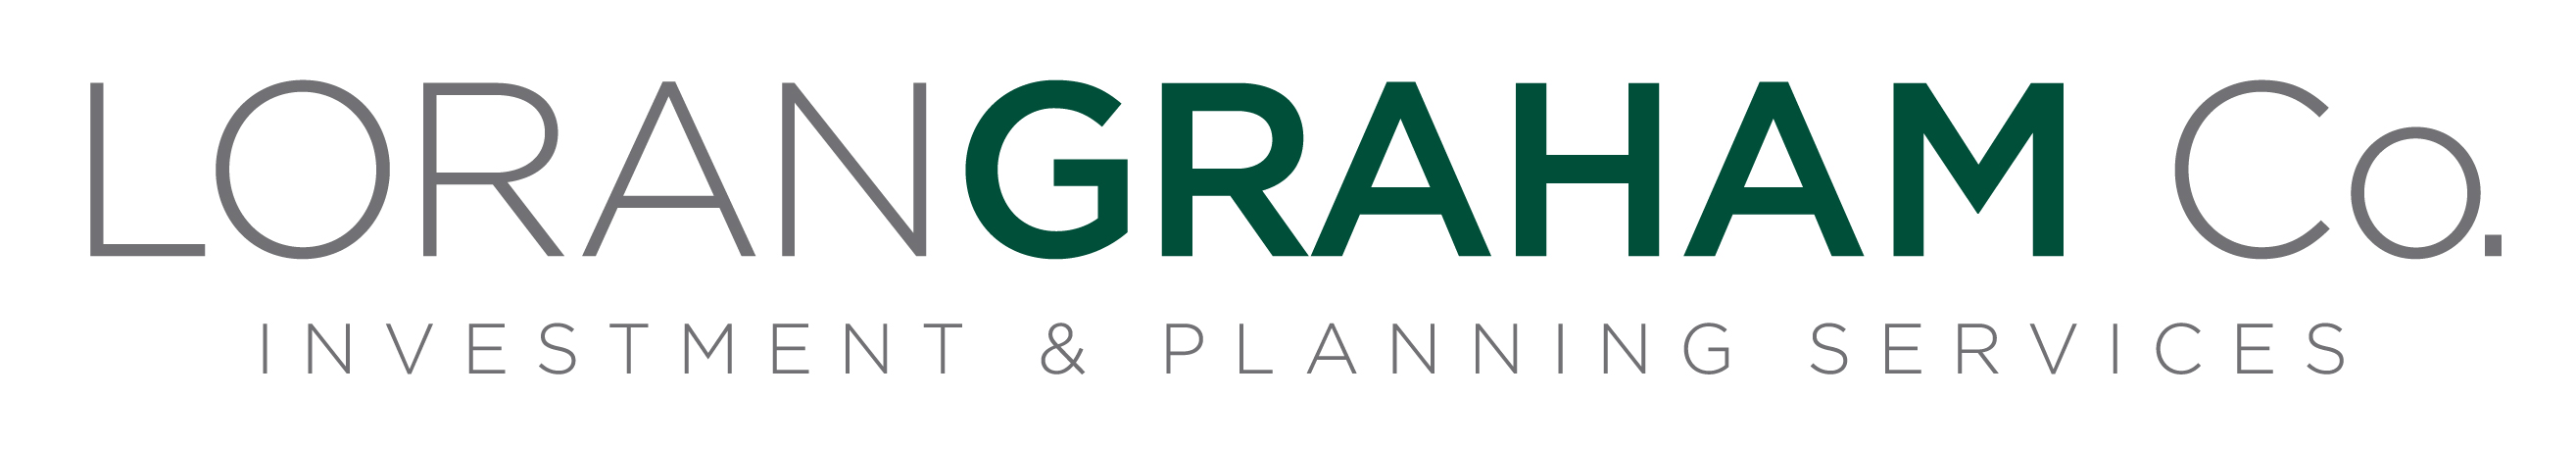 Loran Graham Co Logo